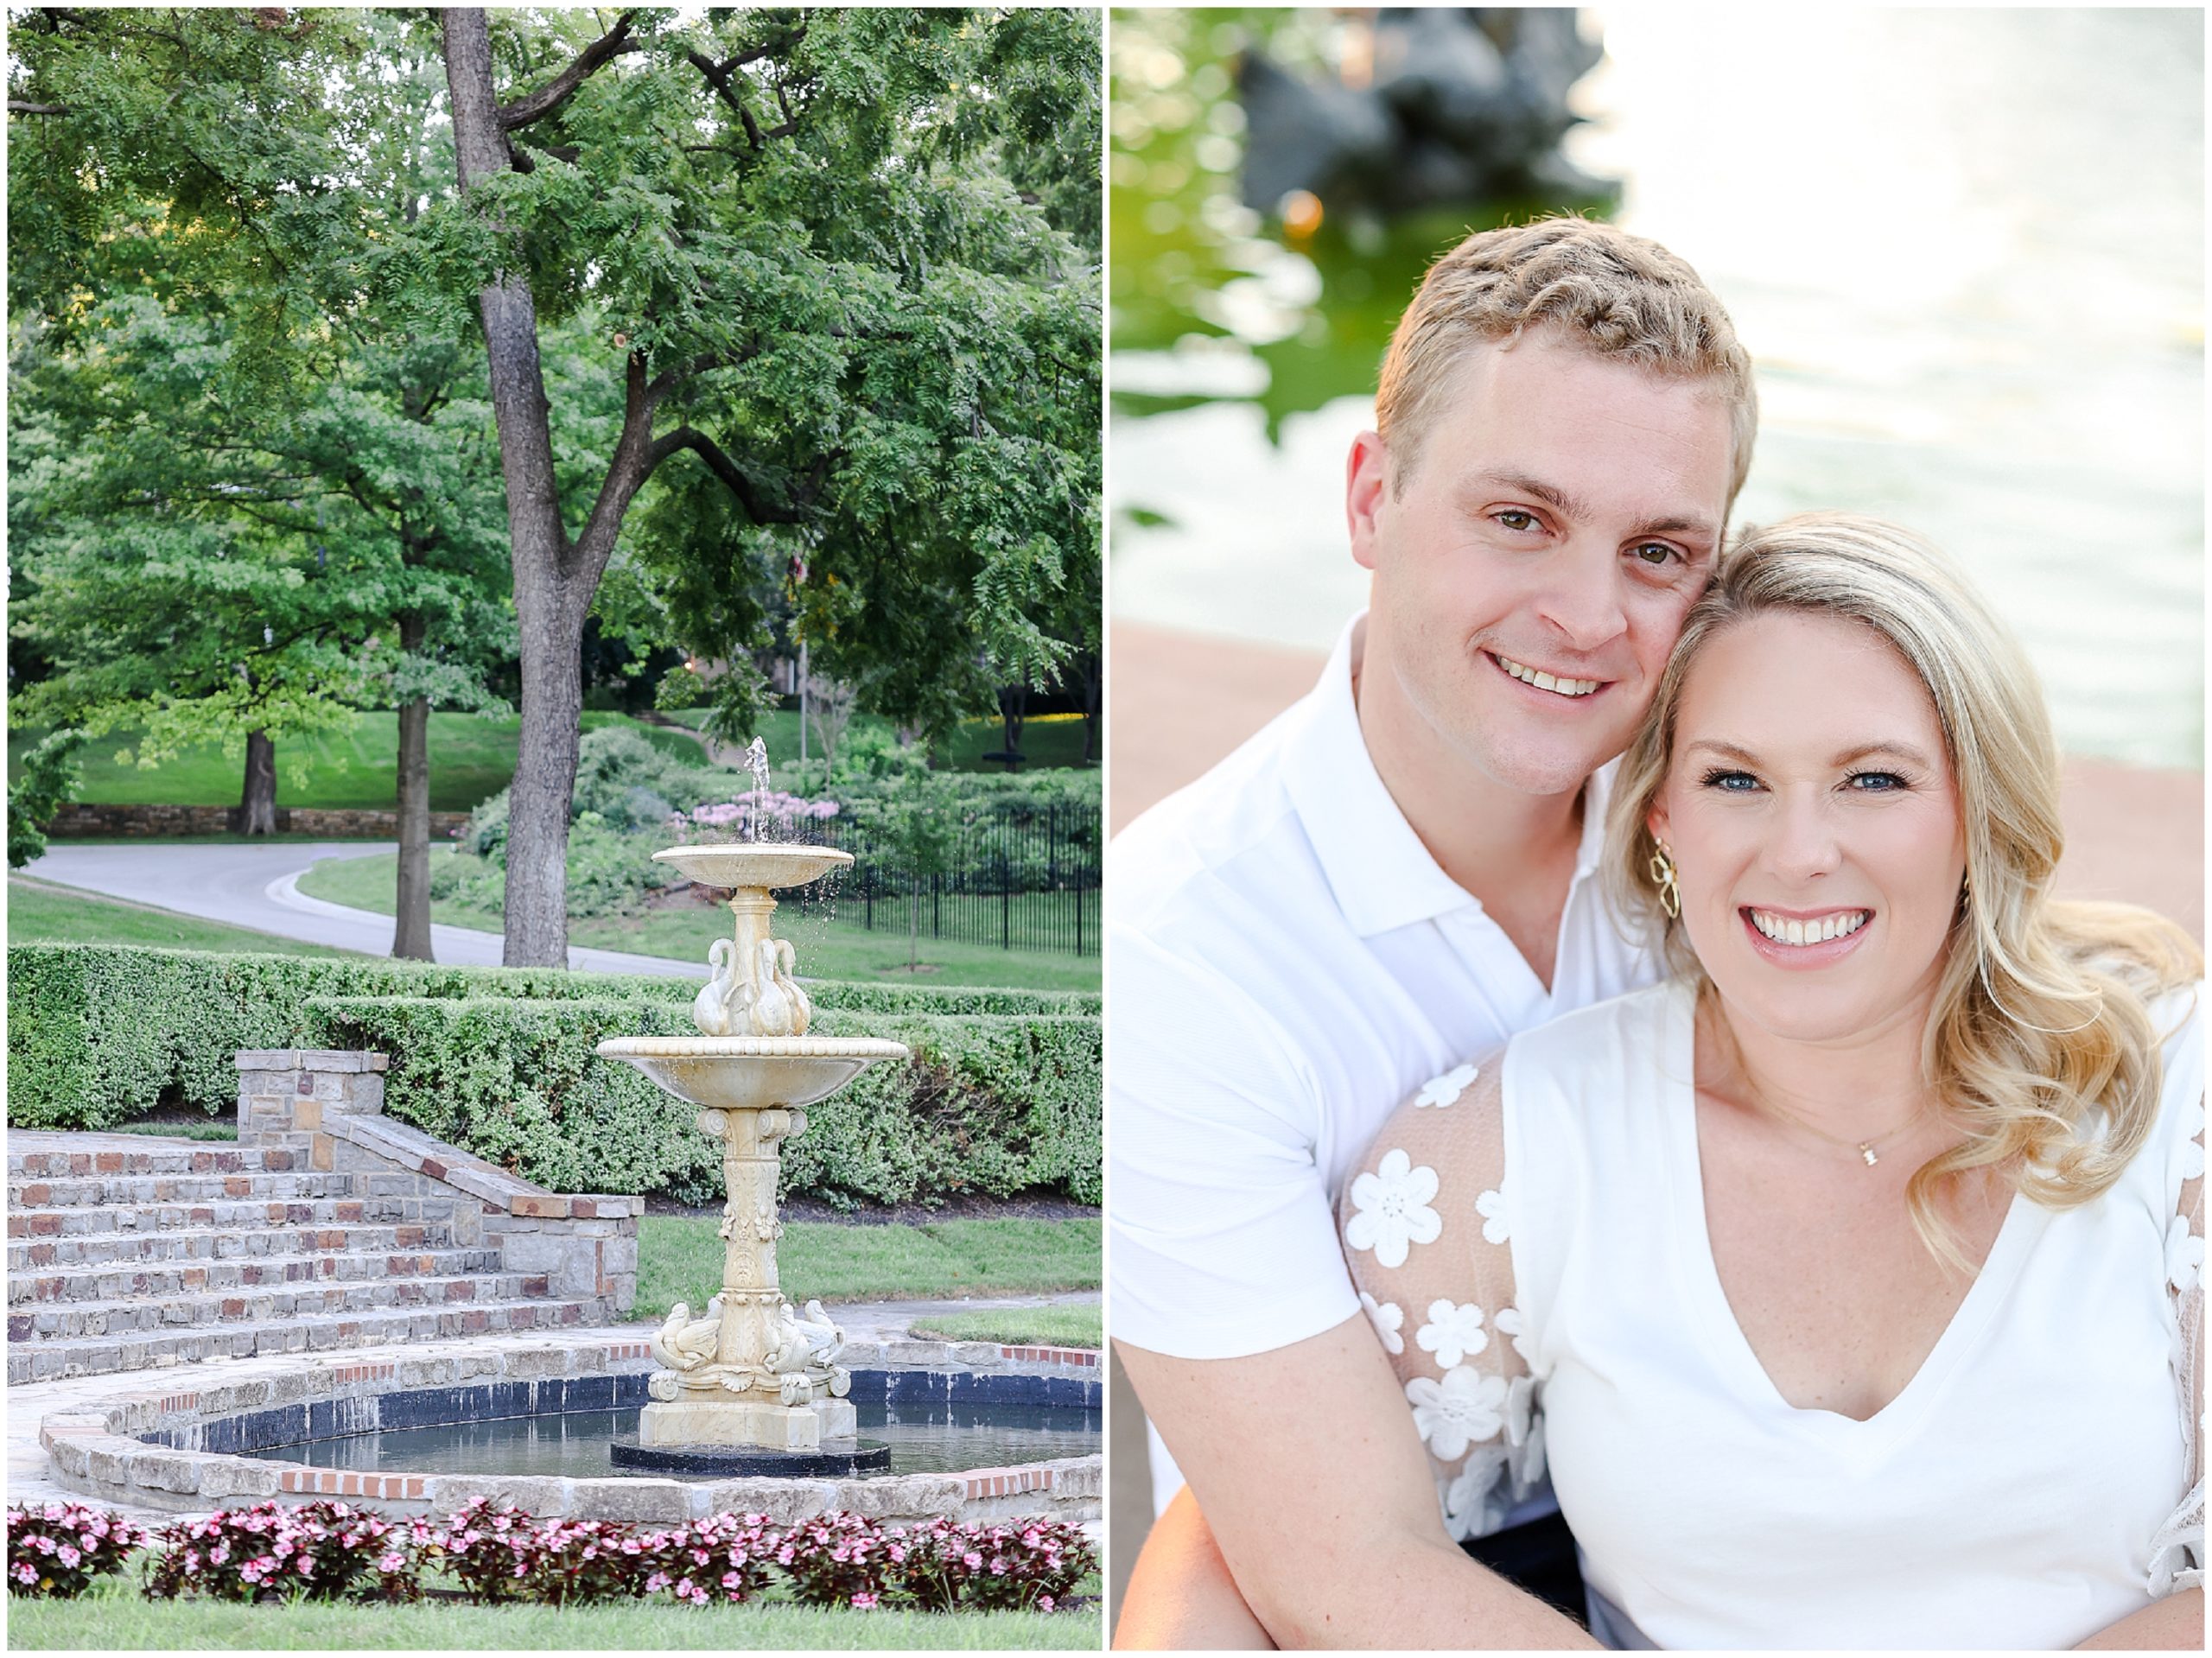 Caroline & Nick's Engagement Portraits in Kansas City - The KC Plaza - Luxury Wedding Photography 